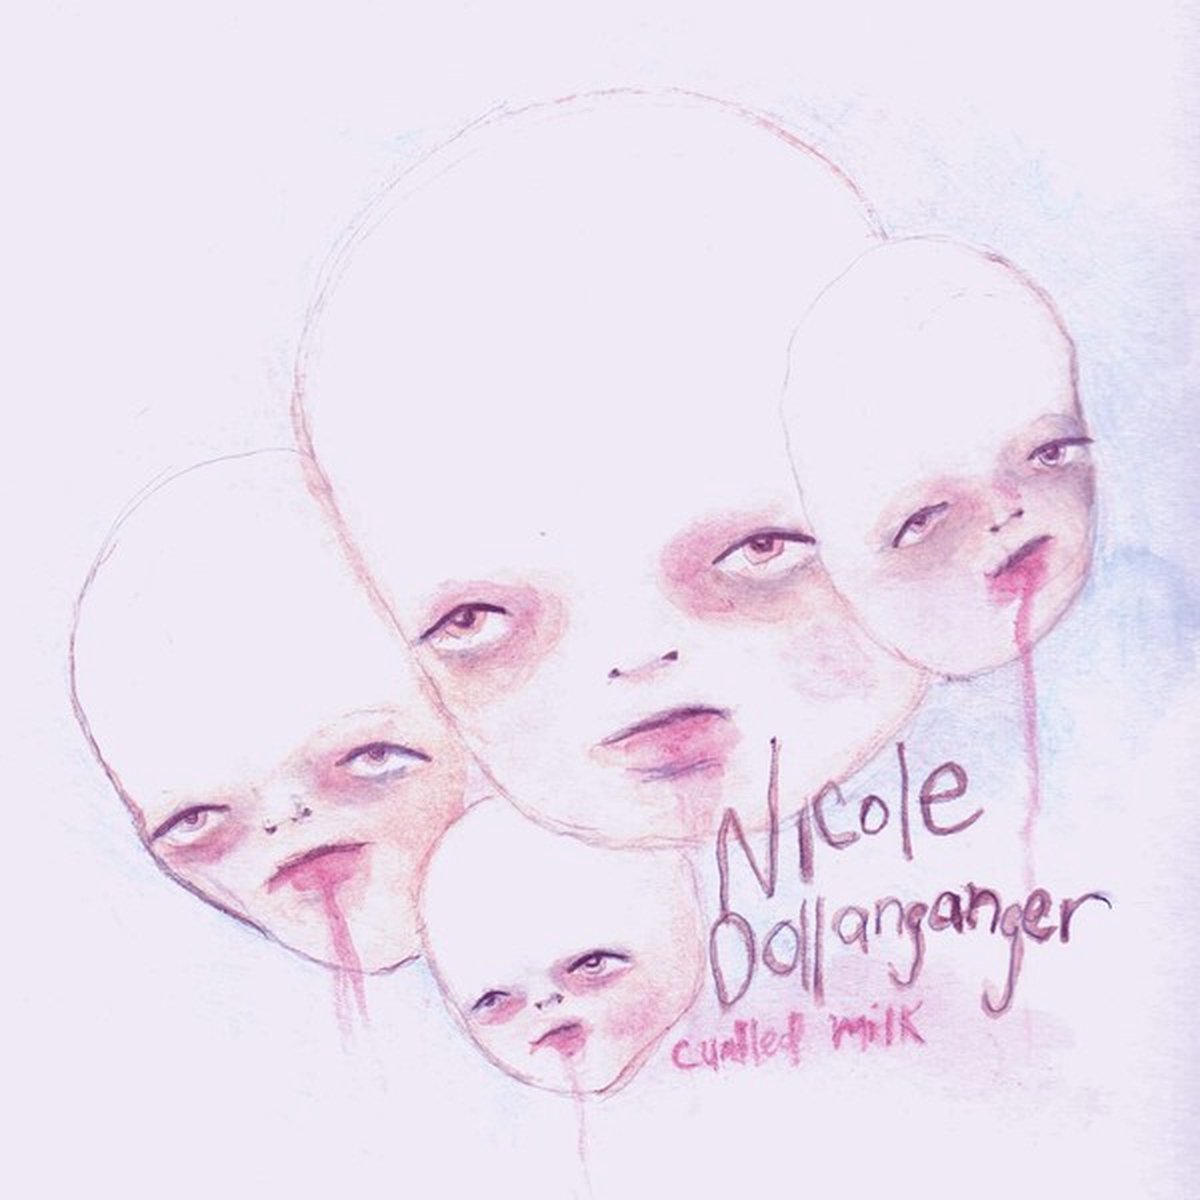 Nicole Dollanganger - Curdled Milk (CD) - Nicole Dollanganger